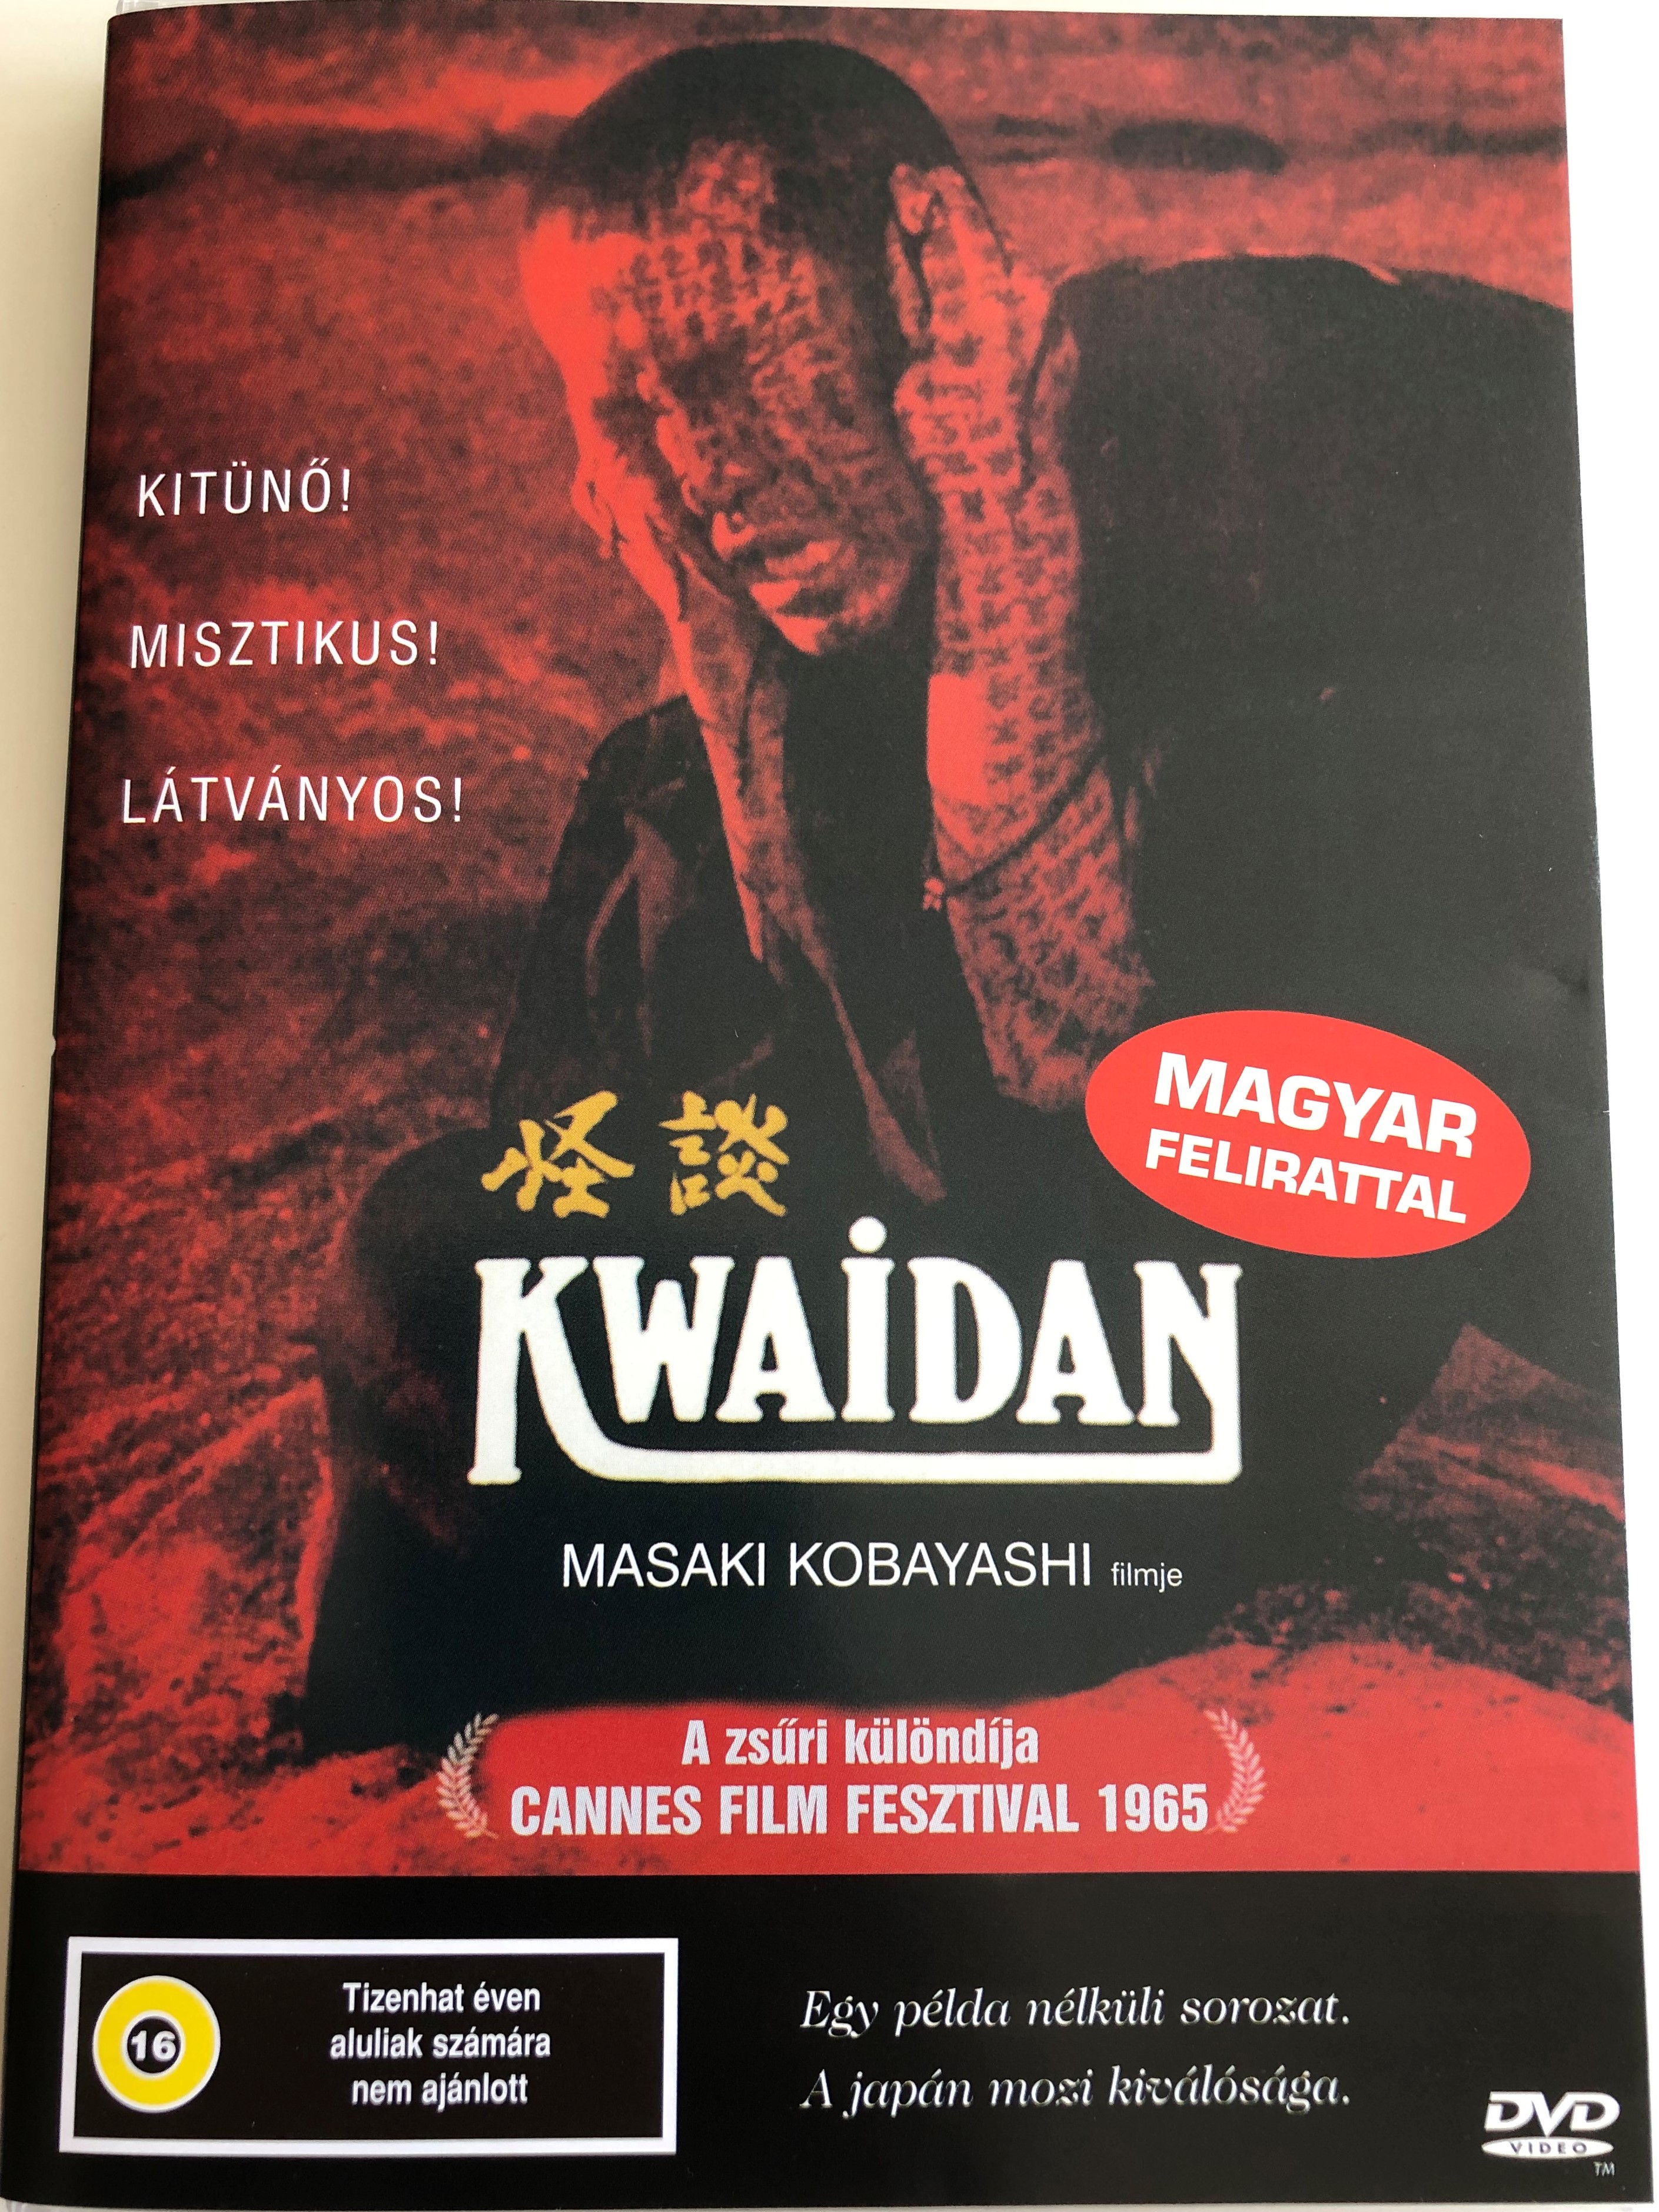 kwaidan-dvd-1965-directed-by-masaki-kobayashi-starring-rentar-mikuni-keiko-kishi-kazuo-nakamura-kanemon-nakamura-1-.jpg